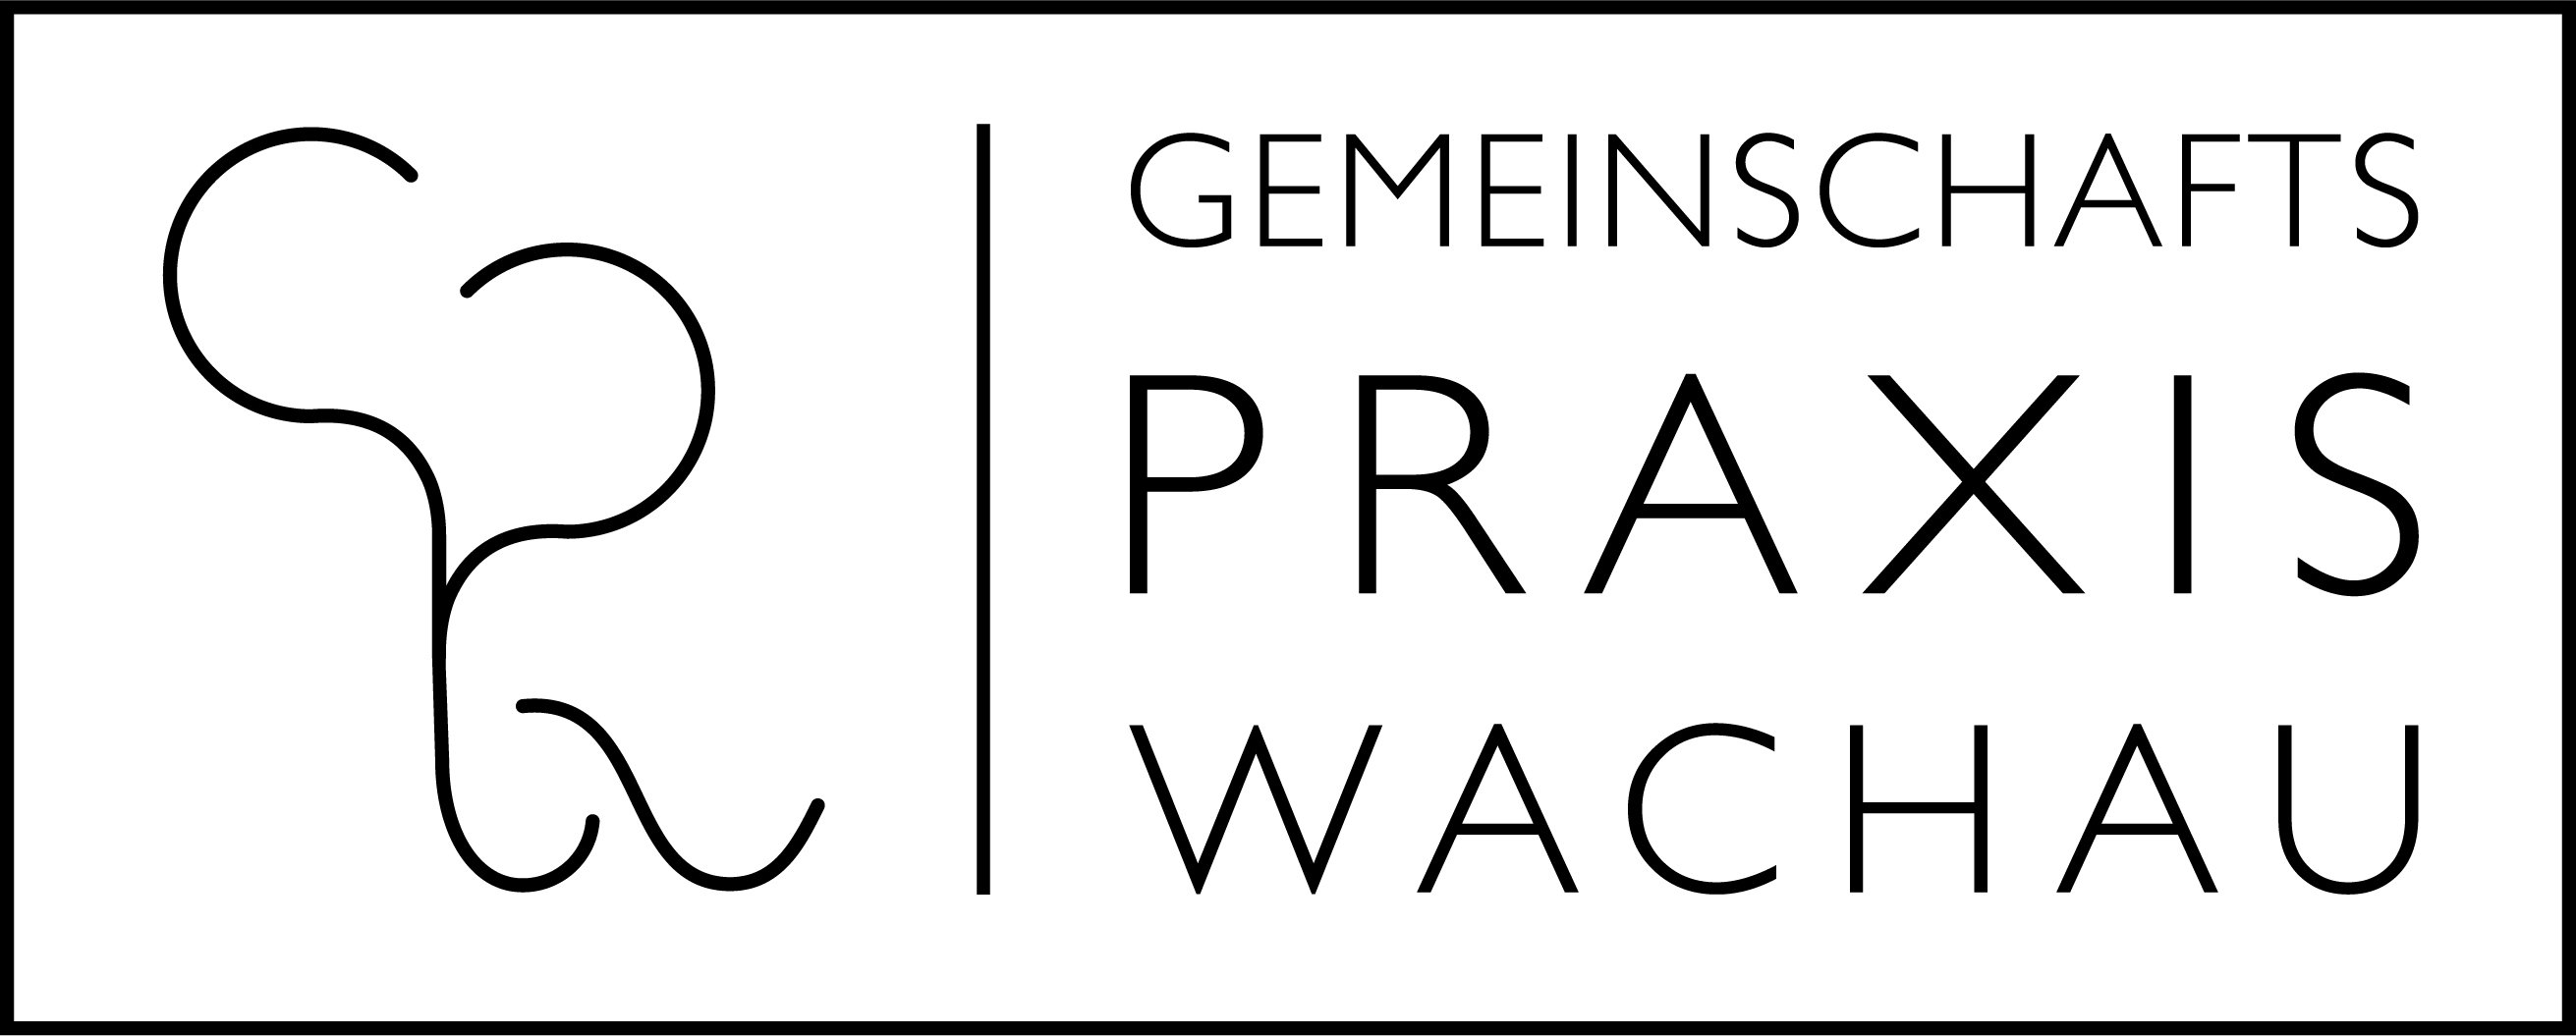 Gemeinschaftspraxis Wachau